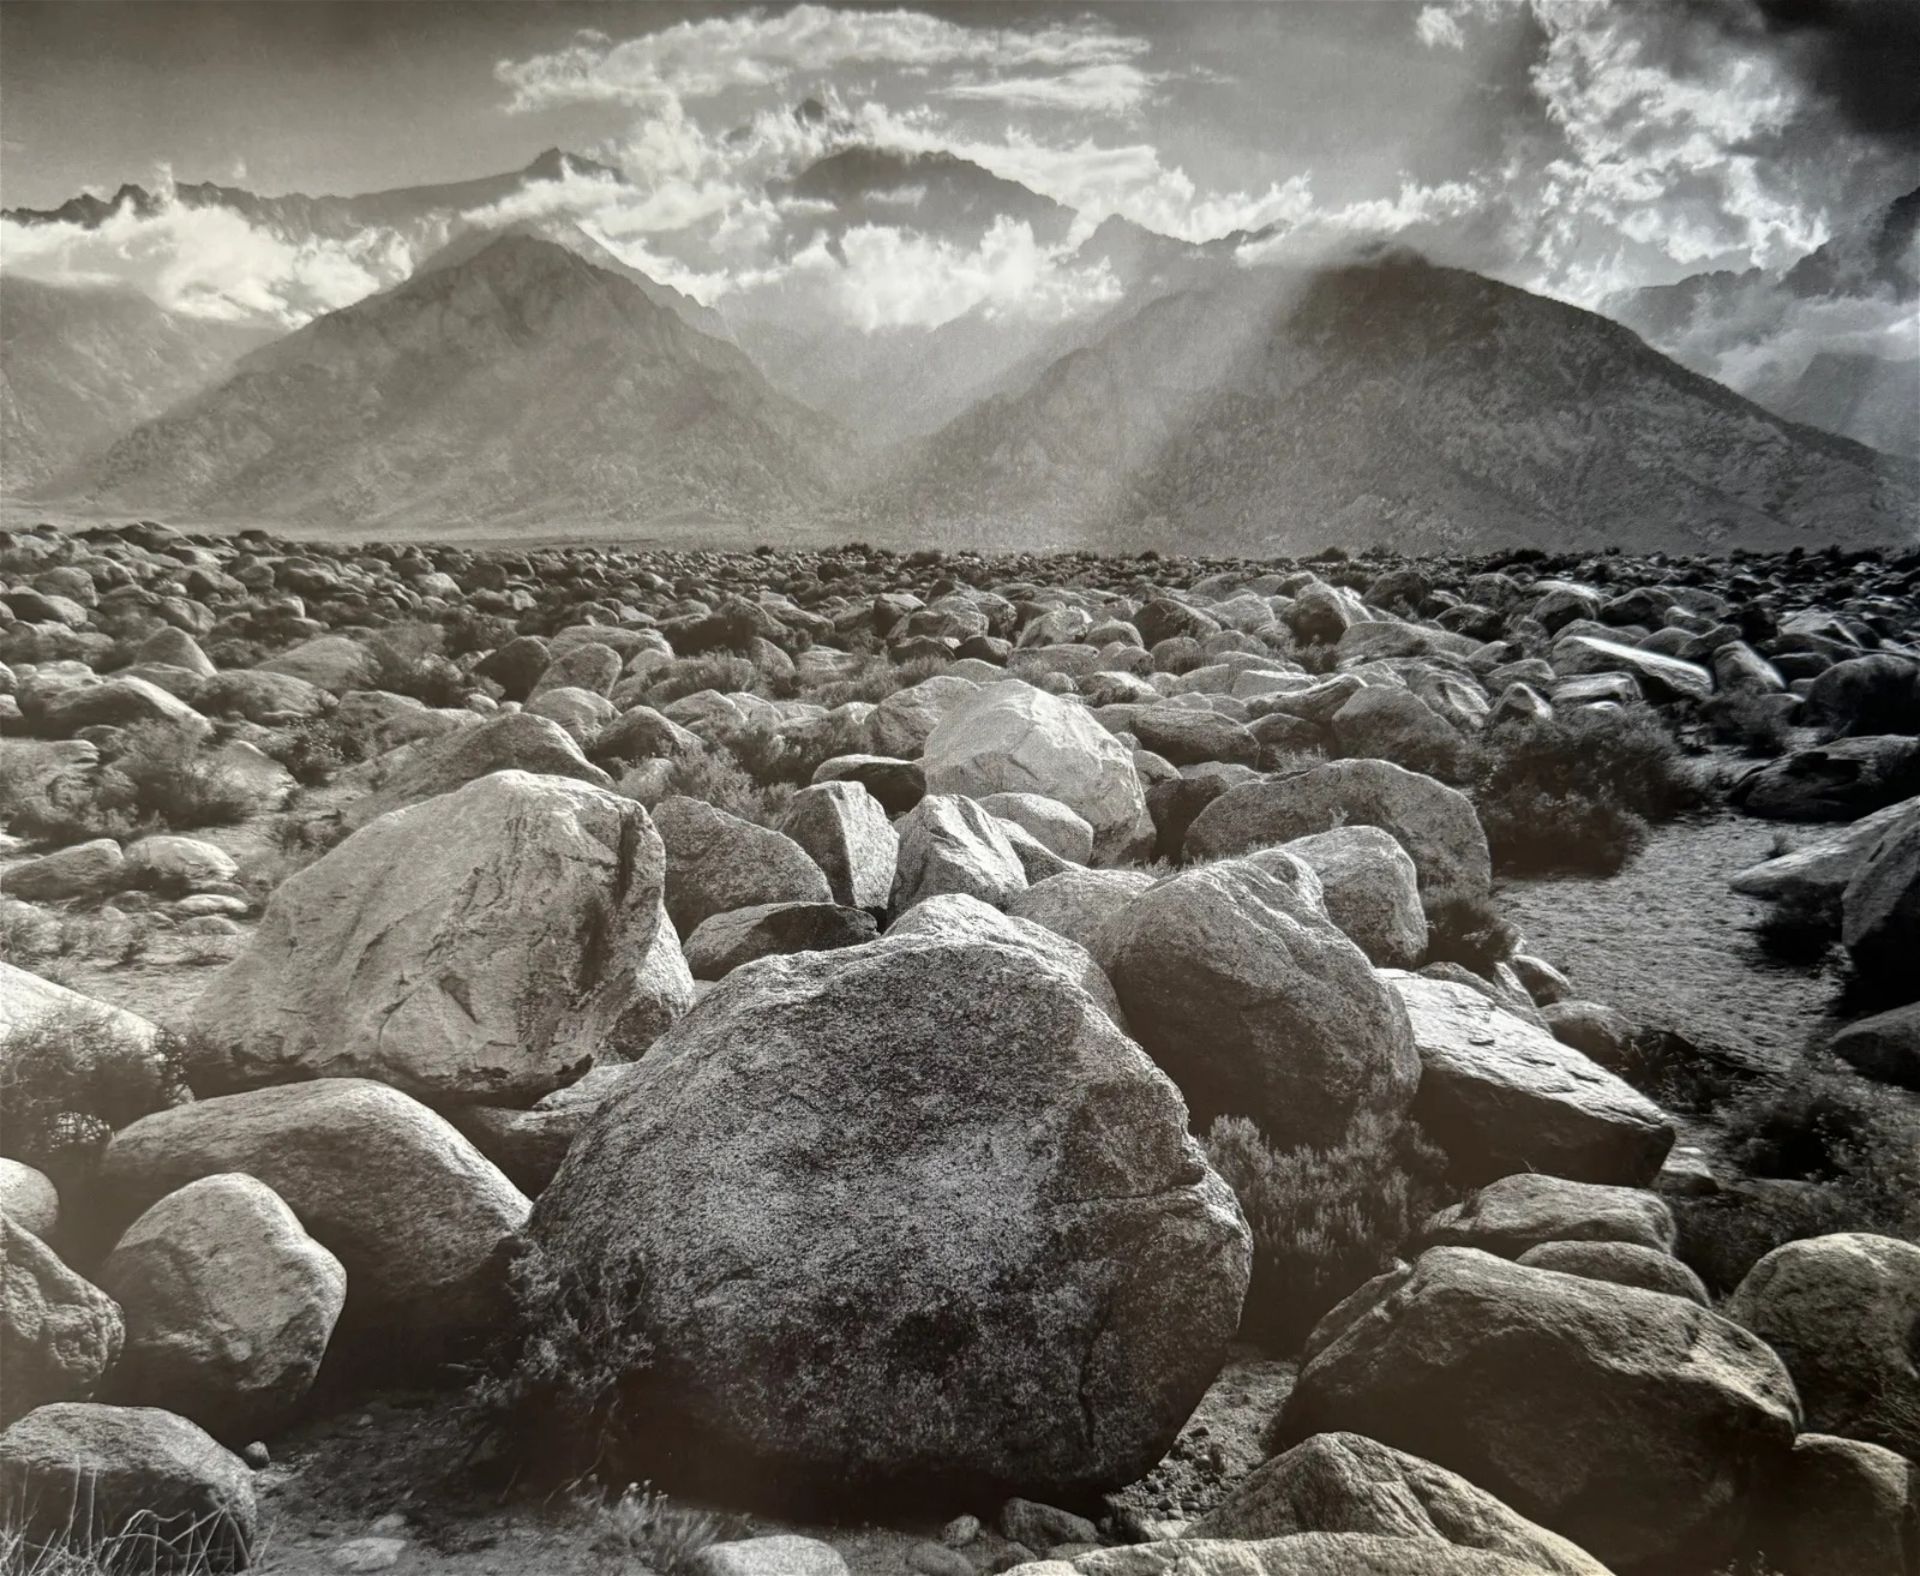 Ansel Adams "Mount Williamson, Sierra Nevada, from Manzanar, 1944" Print